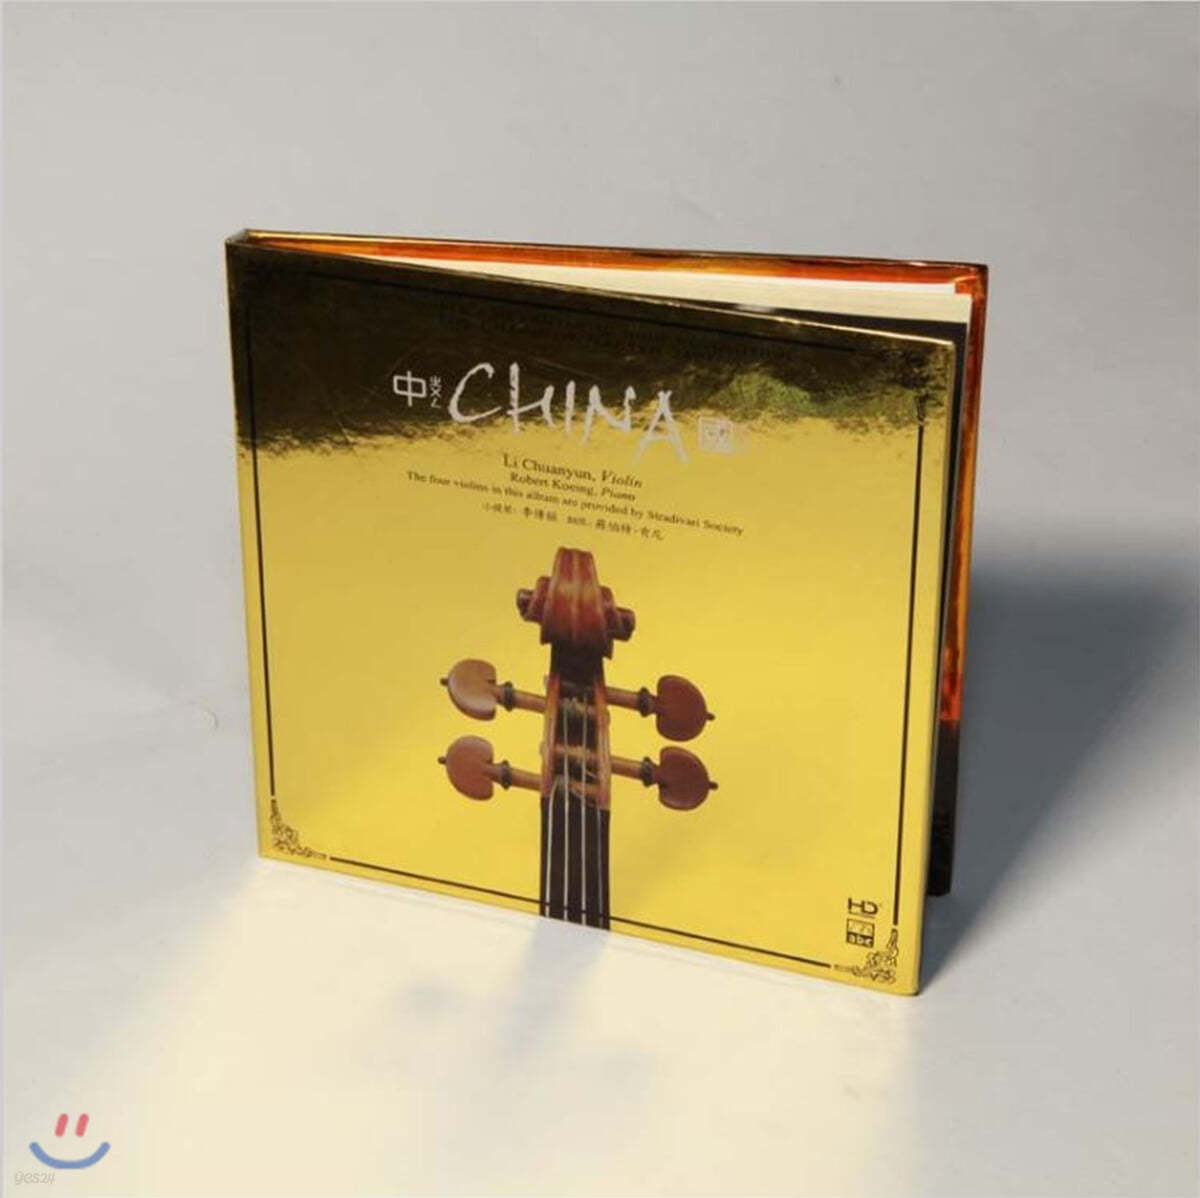 Li Chuanyun &amp; Robert Koenig (리전운 &amp; 로버트 쾨니그) - China